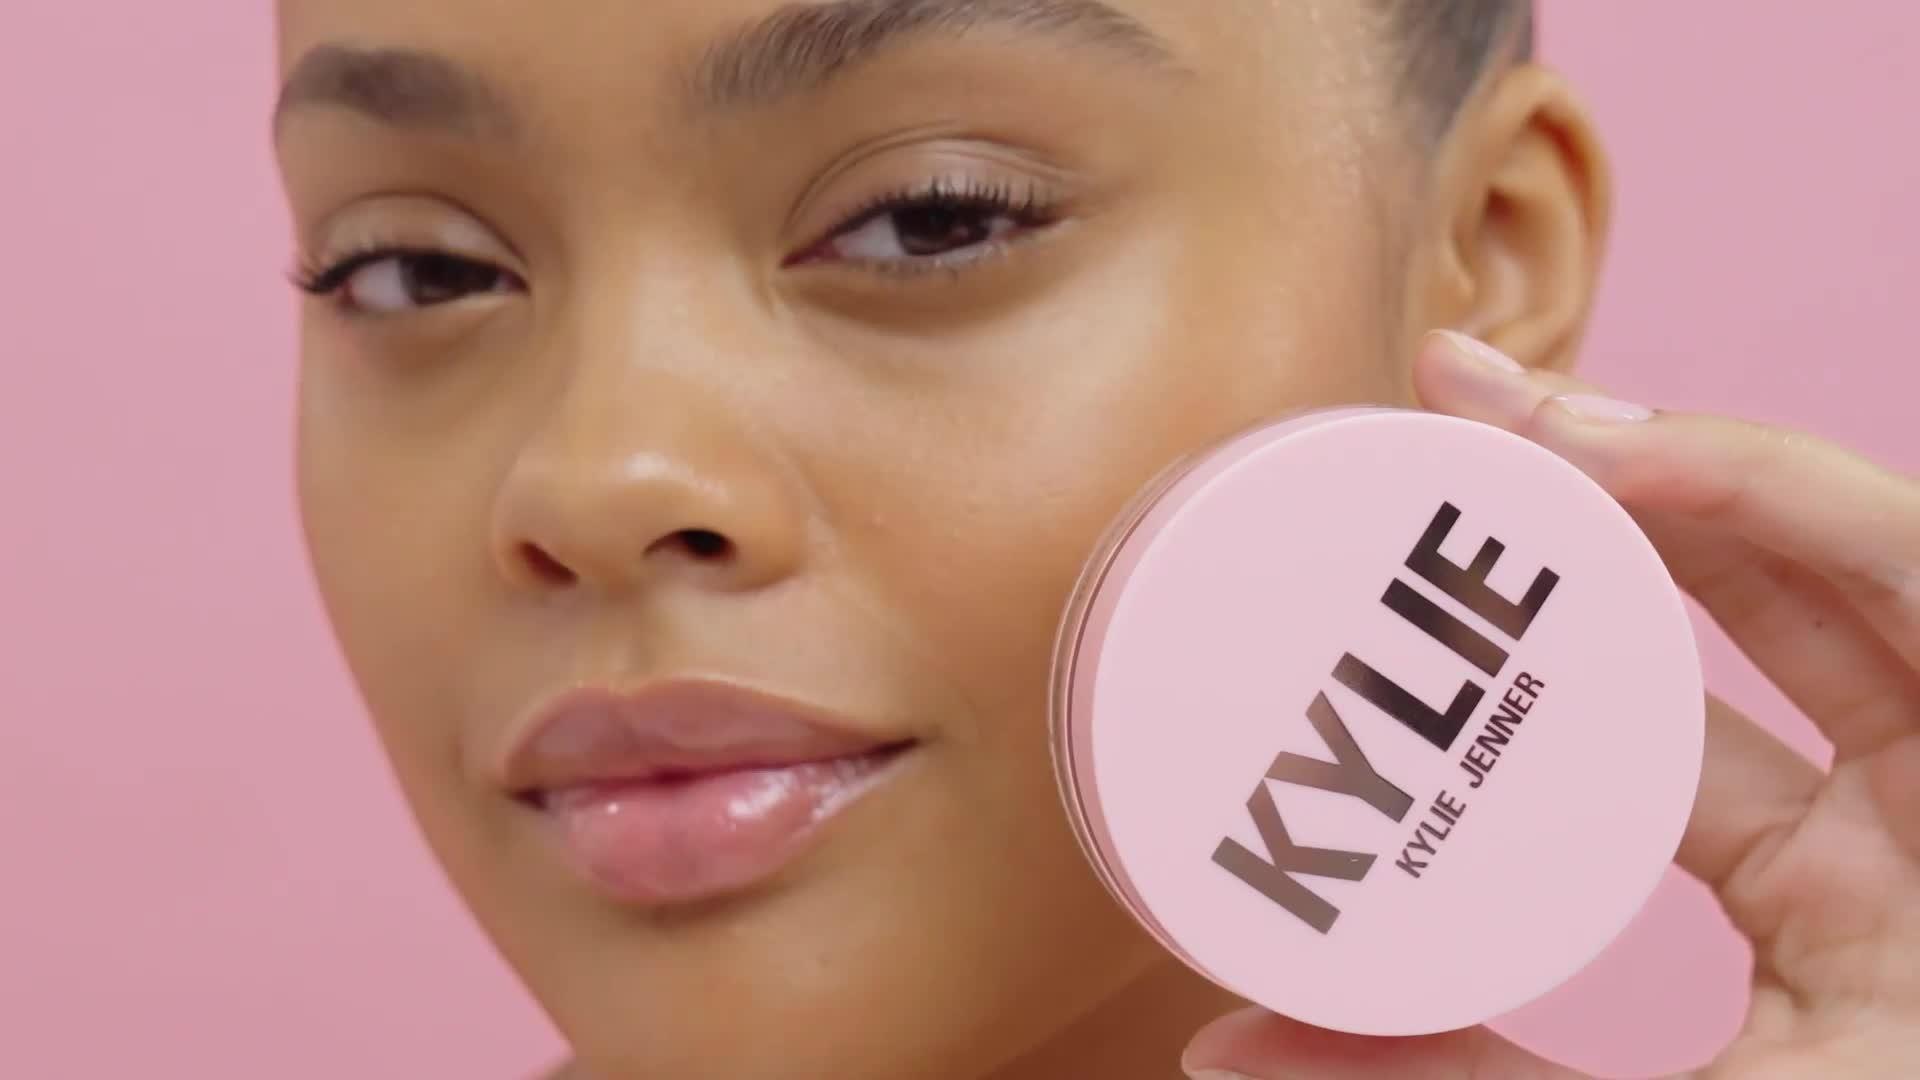 Kylie Cosmetics Kylie Skin Headband